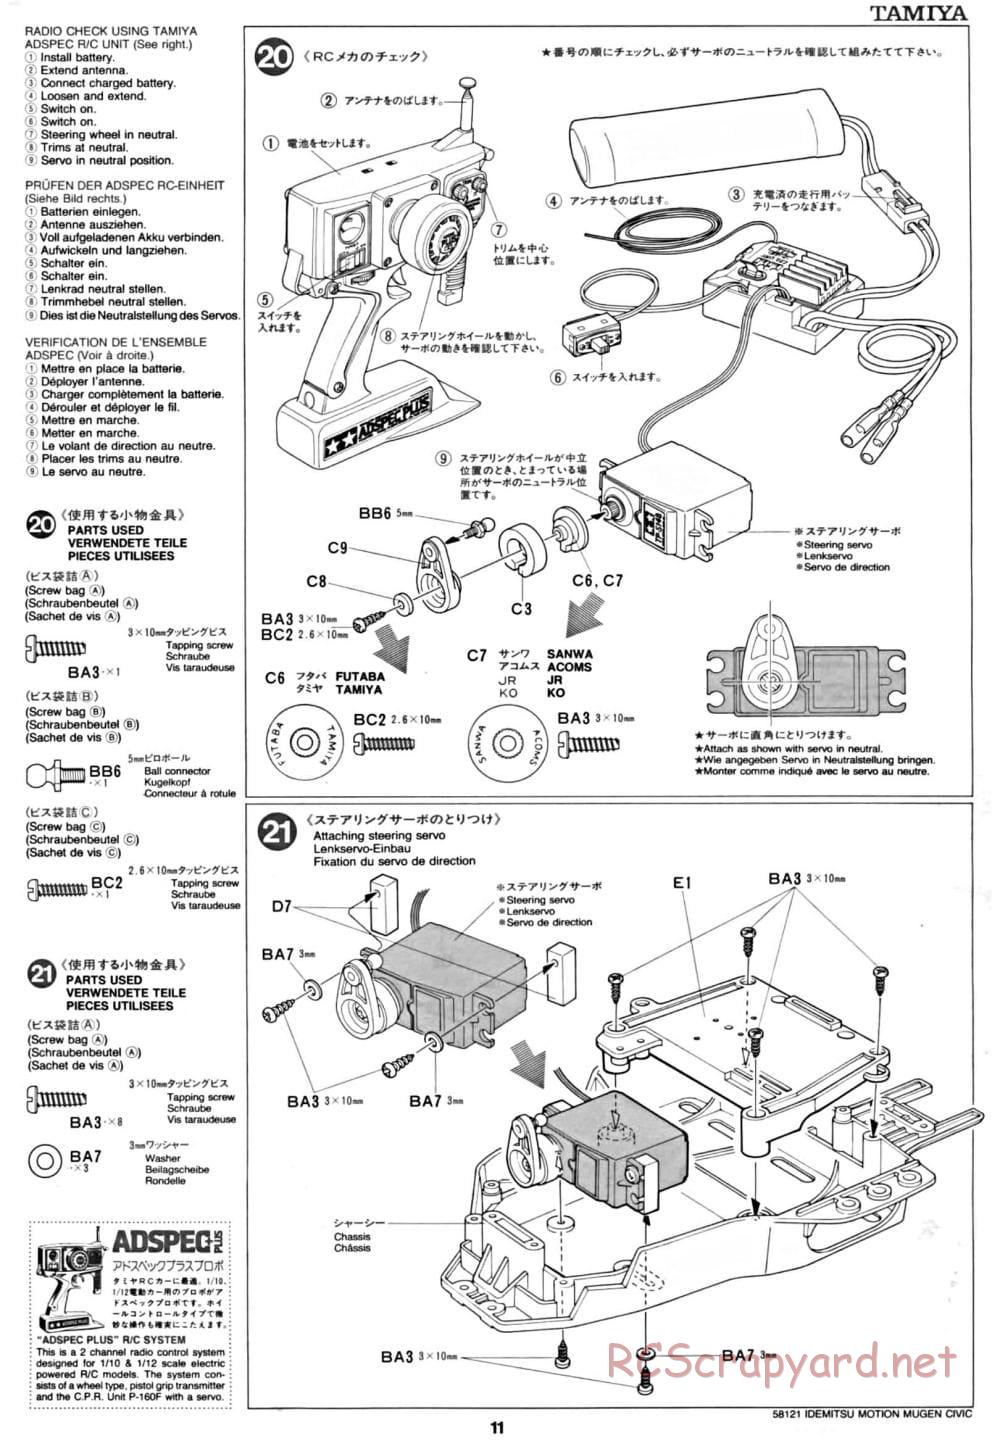 Tamiya - Idemitsu Motion Mugen Civic - FF-01 Chassis - Manual - Page 11